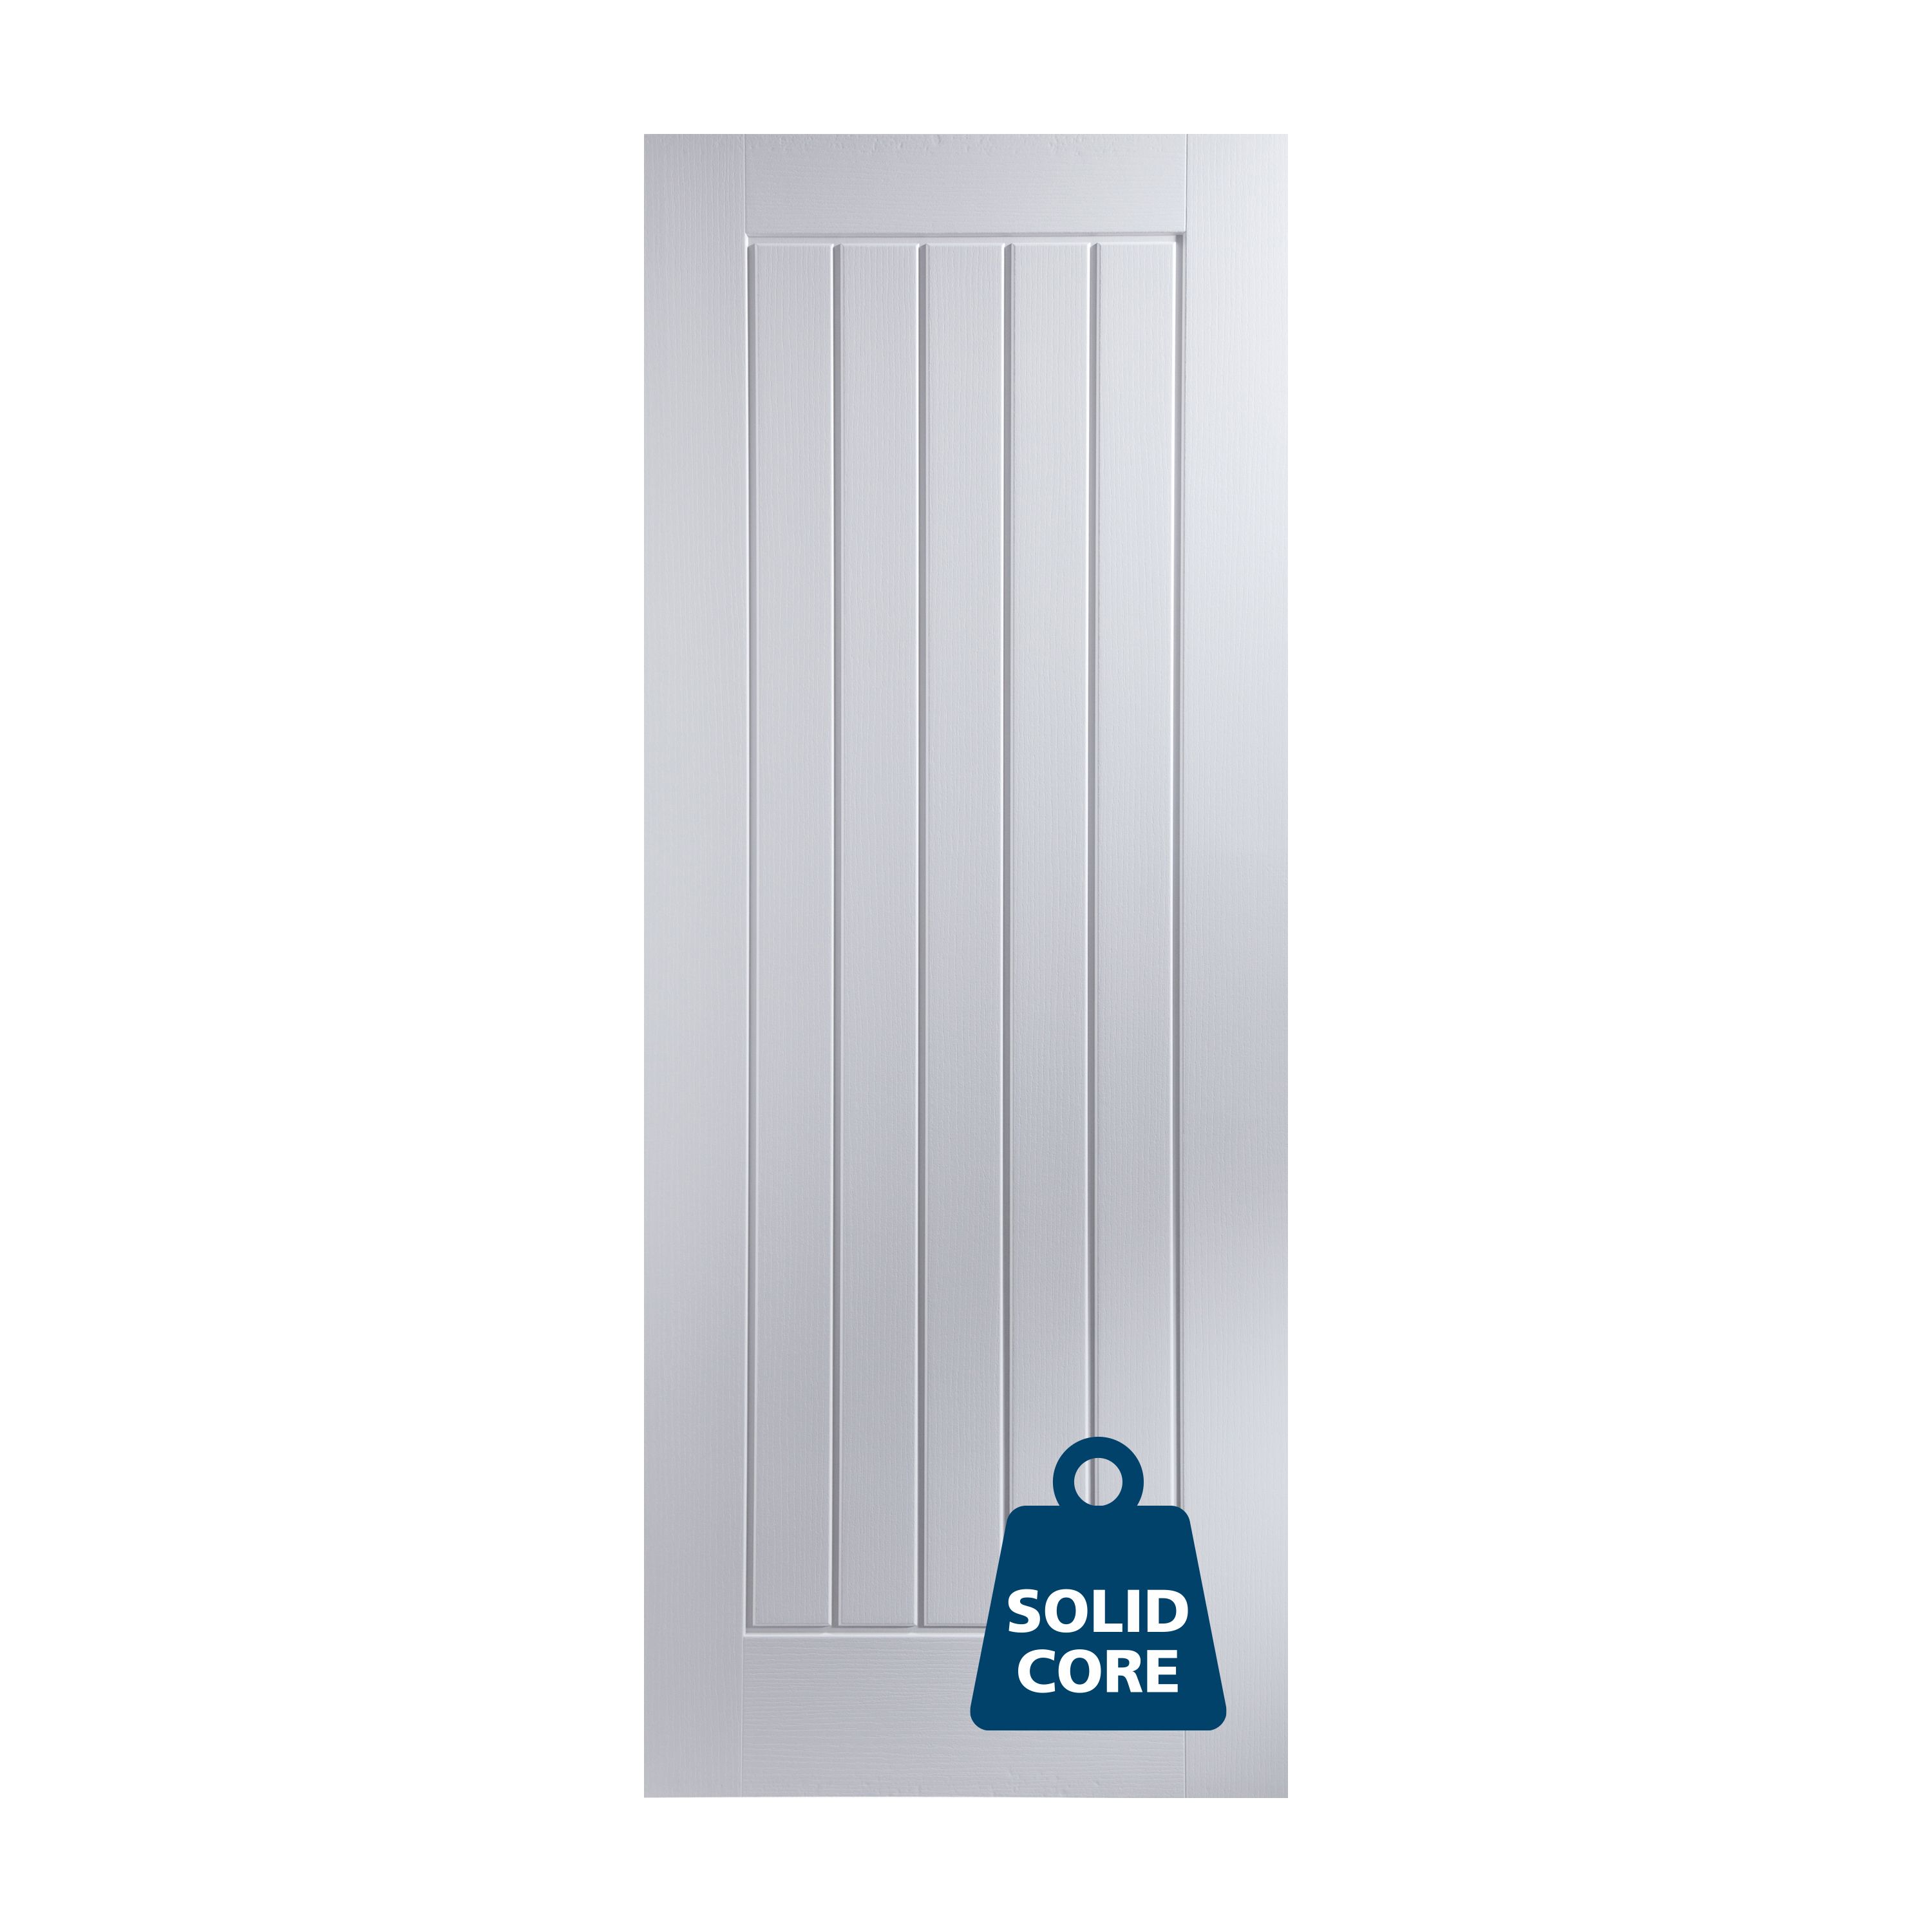 Jeld-Wen Cottage Solid core Unglazed Cottage White Woodgrain effect Internal Door, (H)1981mm (W)762mm (T)35mm